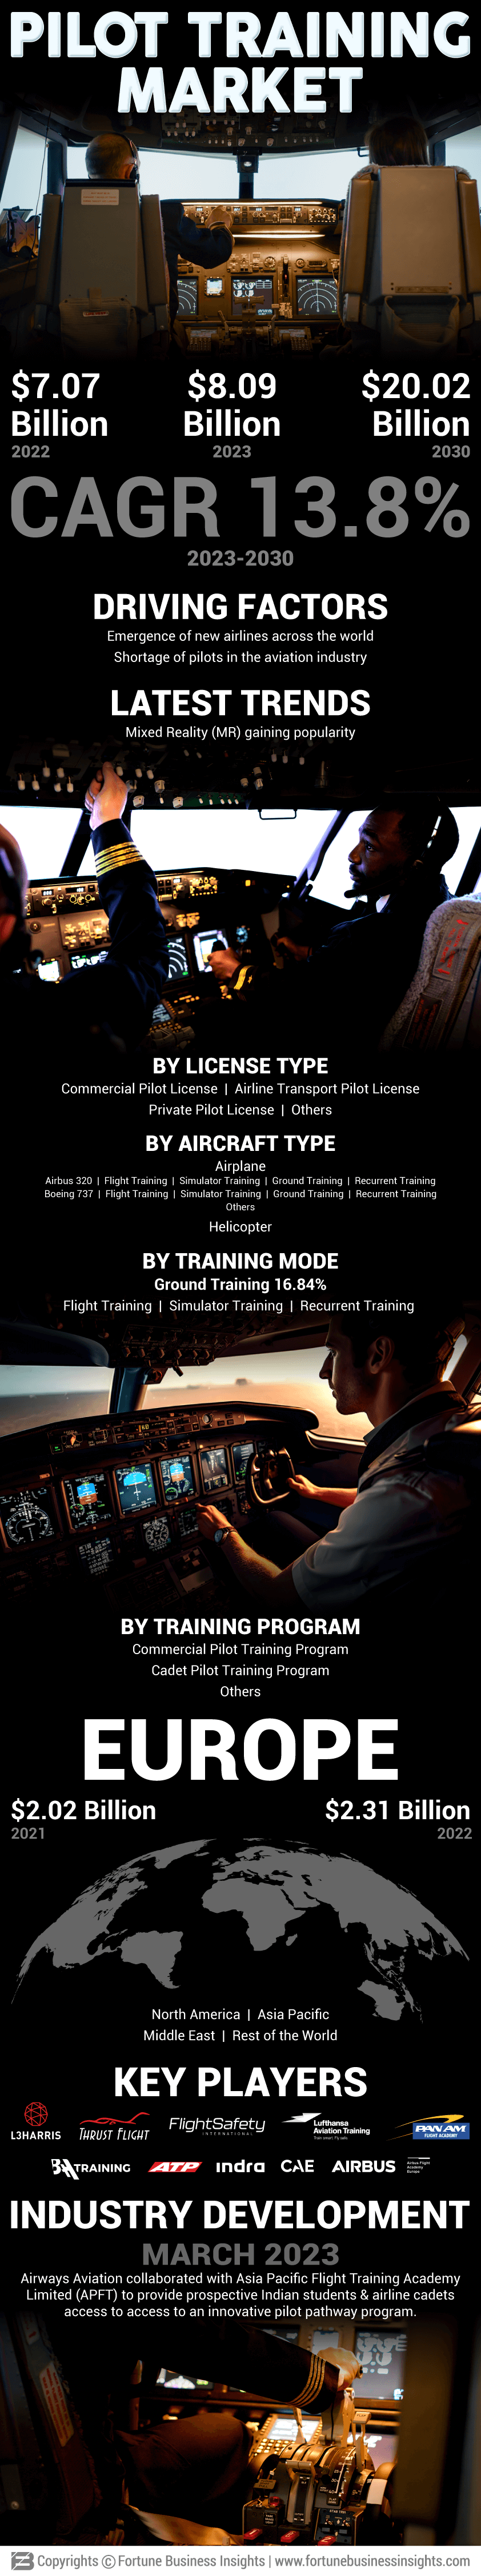 Pilot Training Market